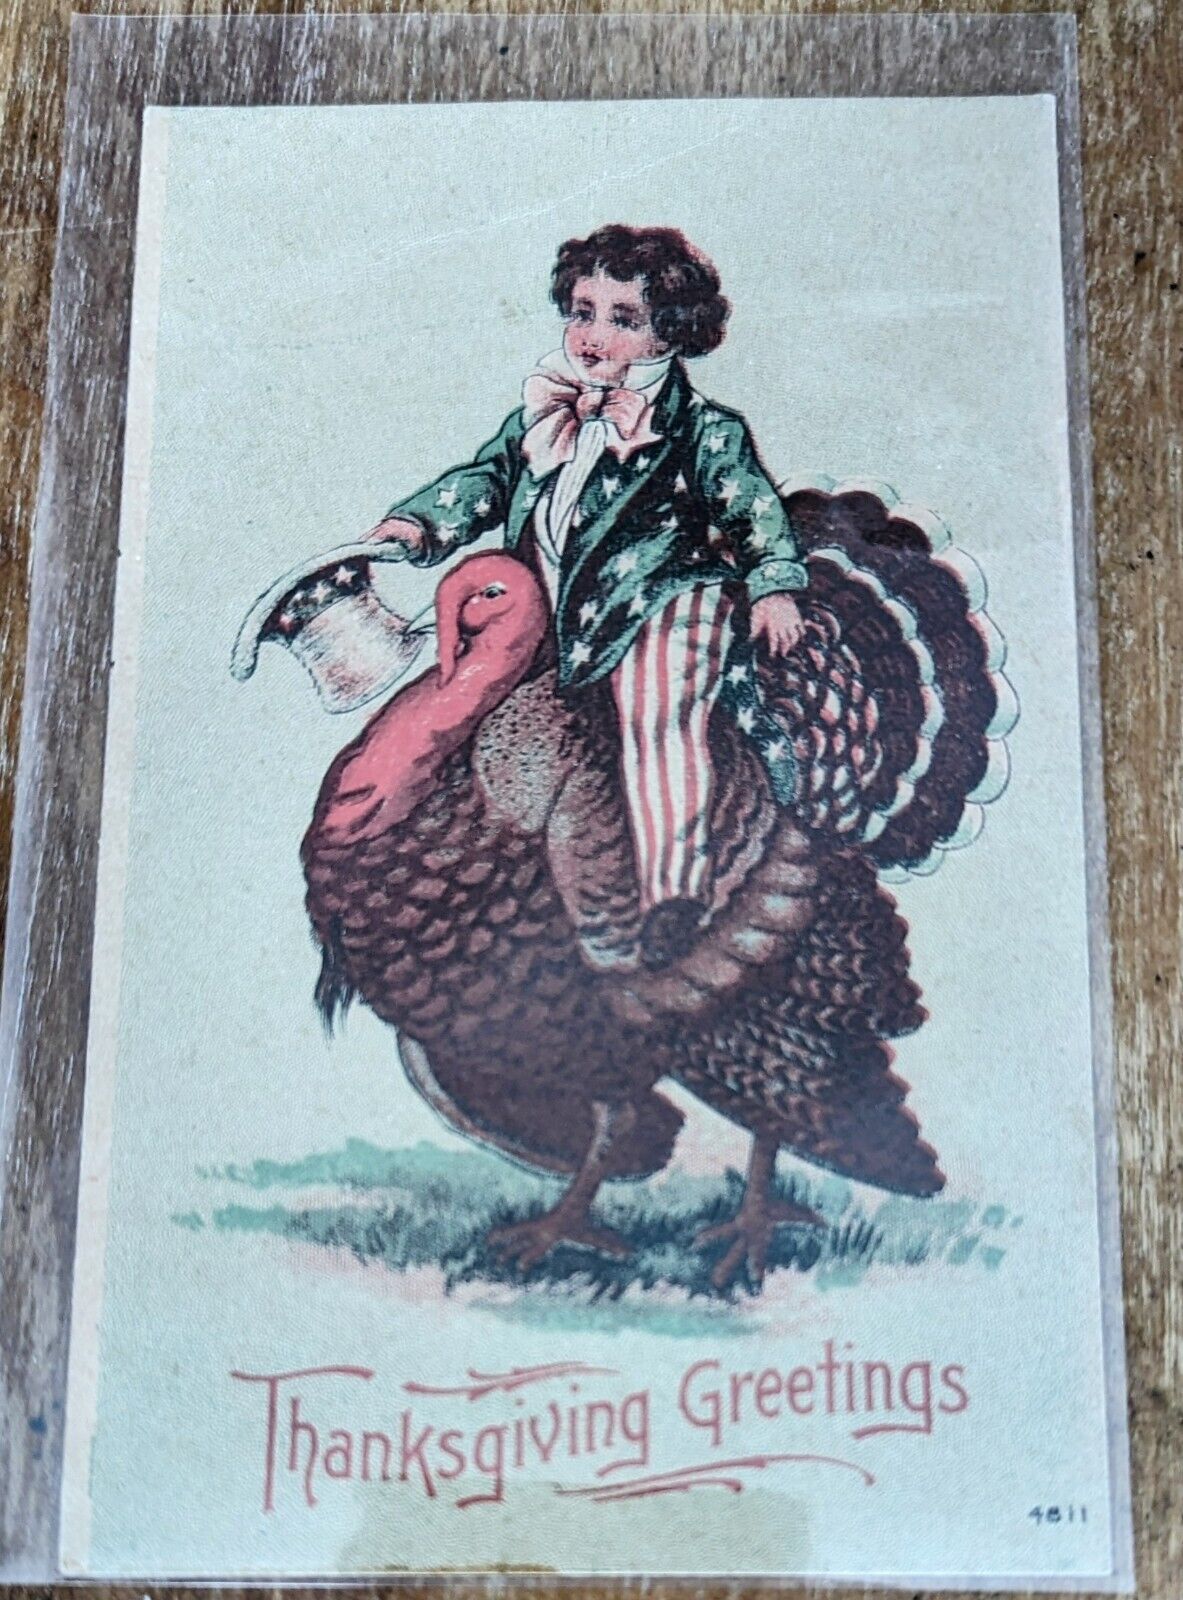 Vintage Patriotic Thanksgiving Greetings Postcard #4611 USA Boy On Turkey